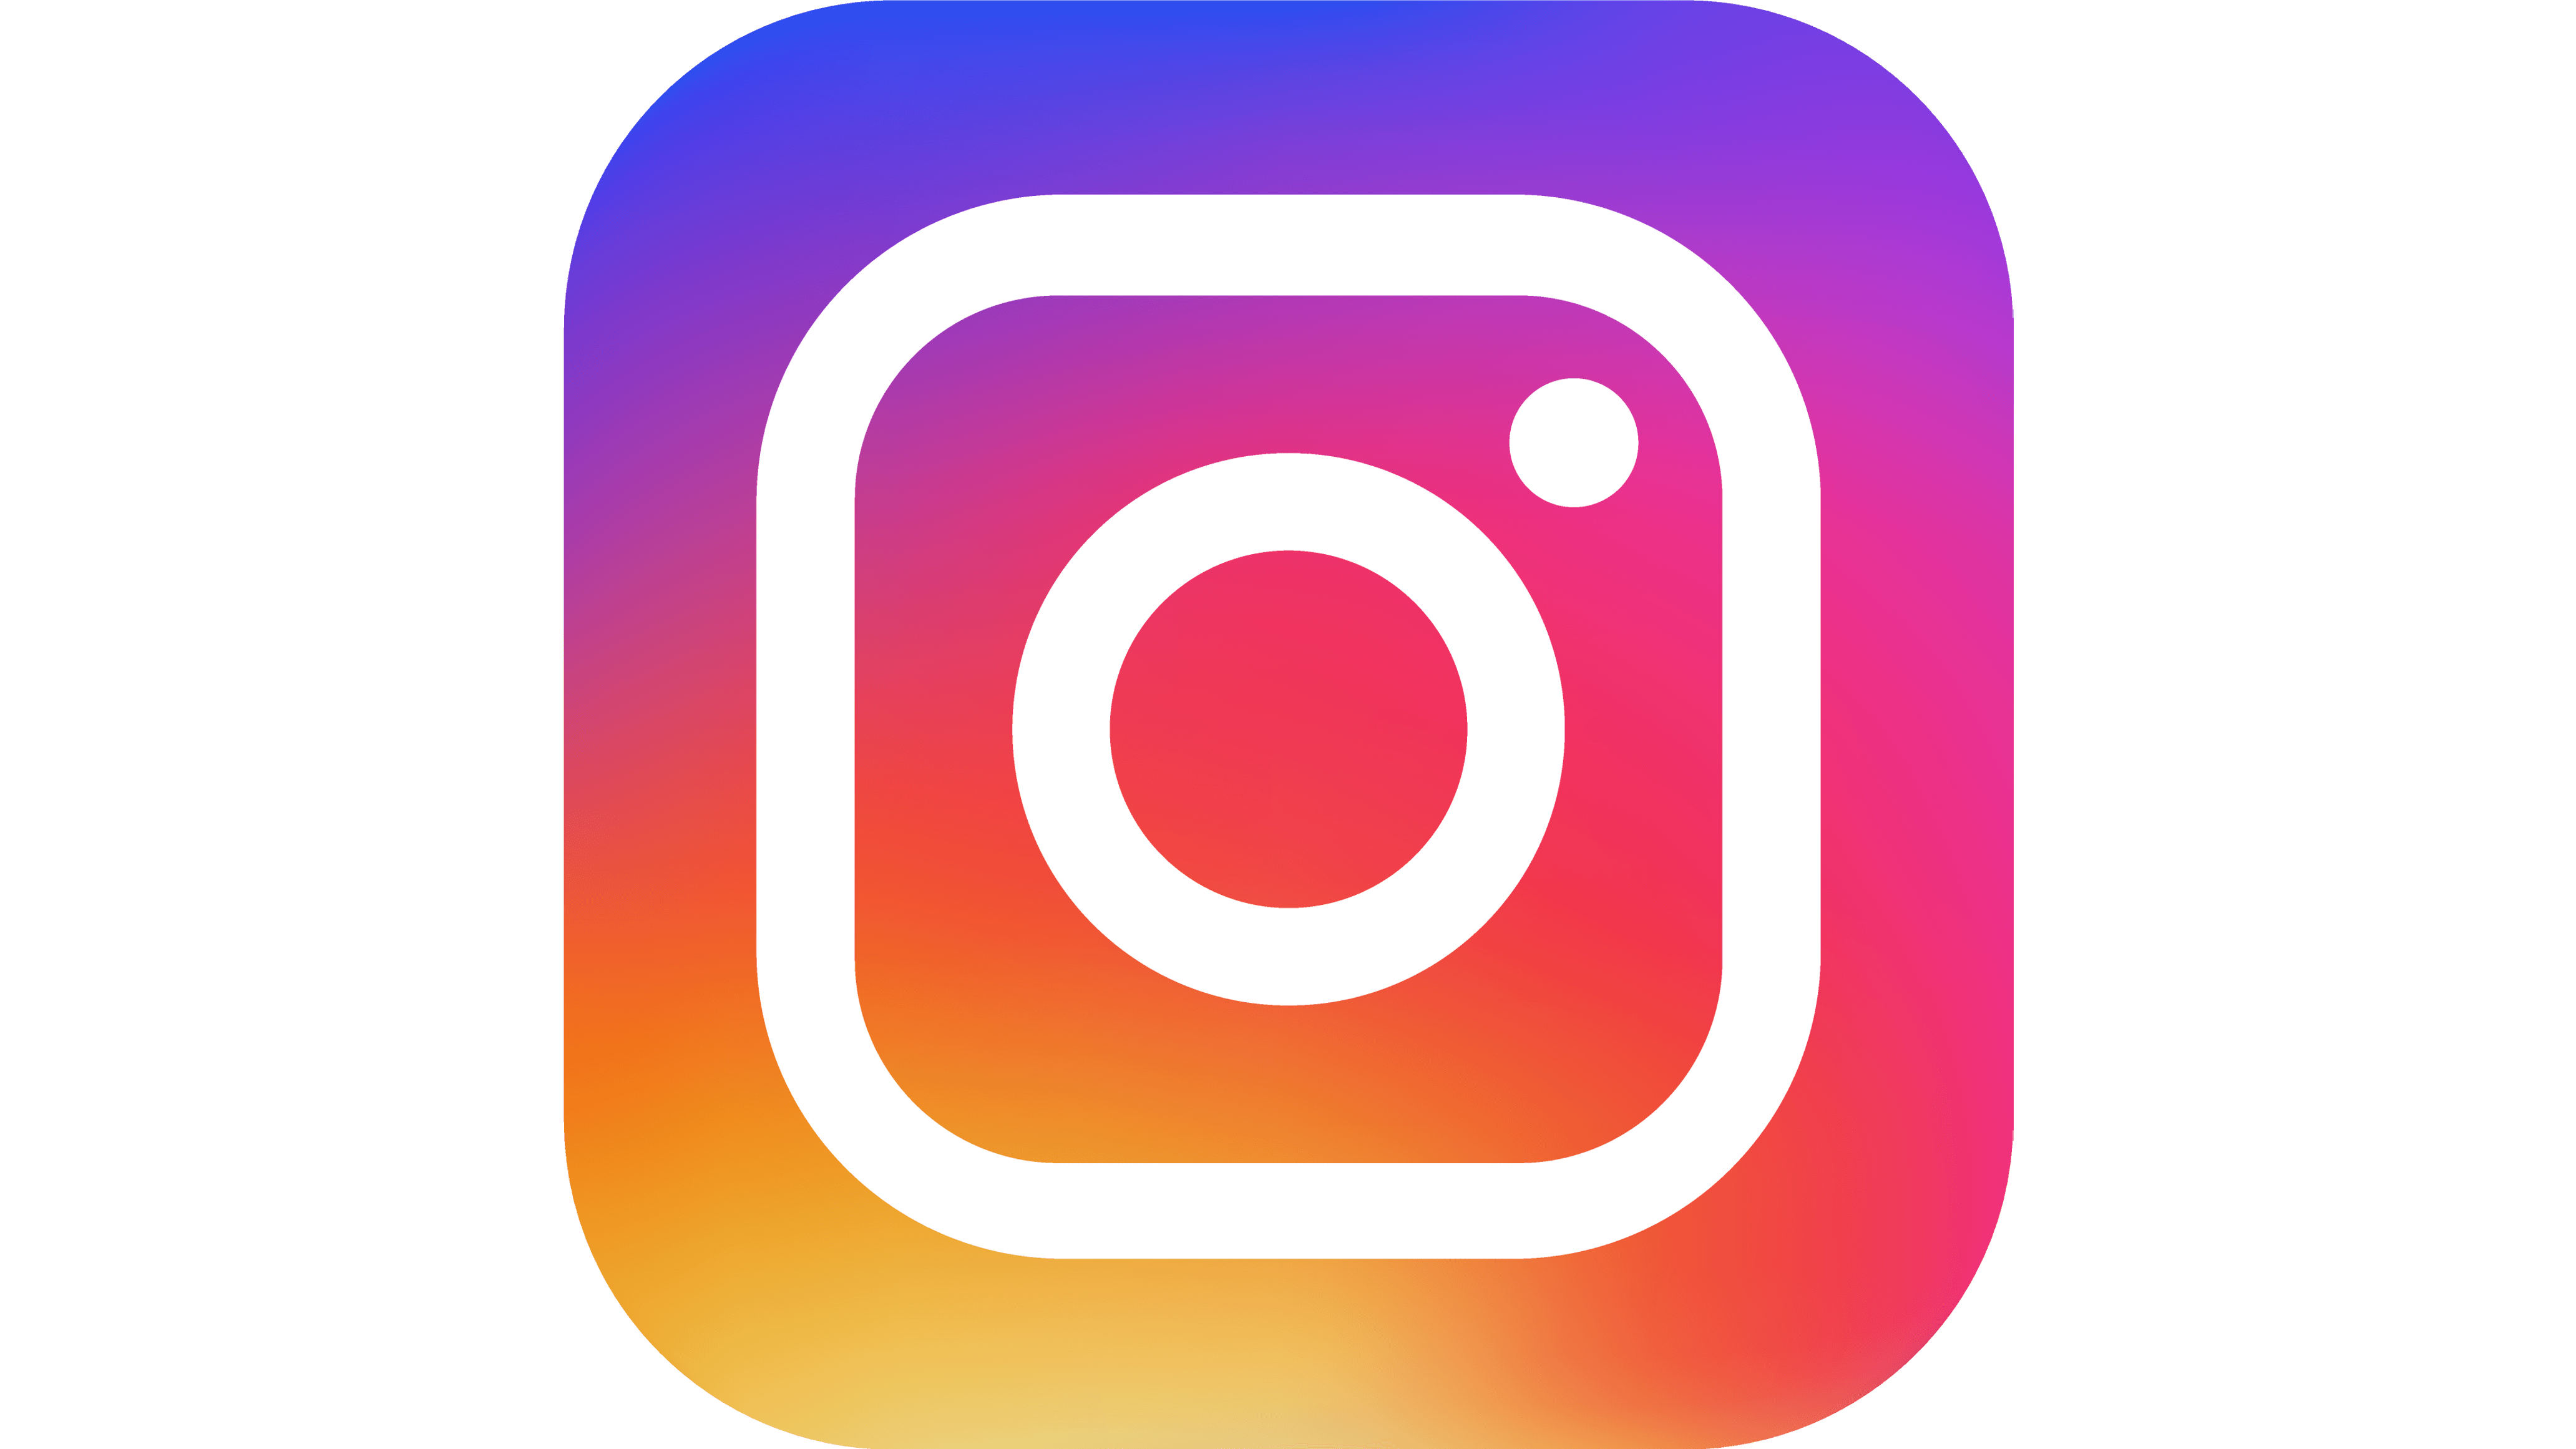 Download Free Logo Media Instagram Jpeg Social Free Frame ICON favicon ...